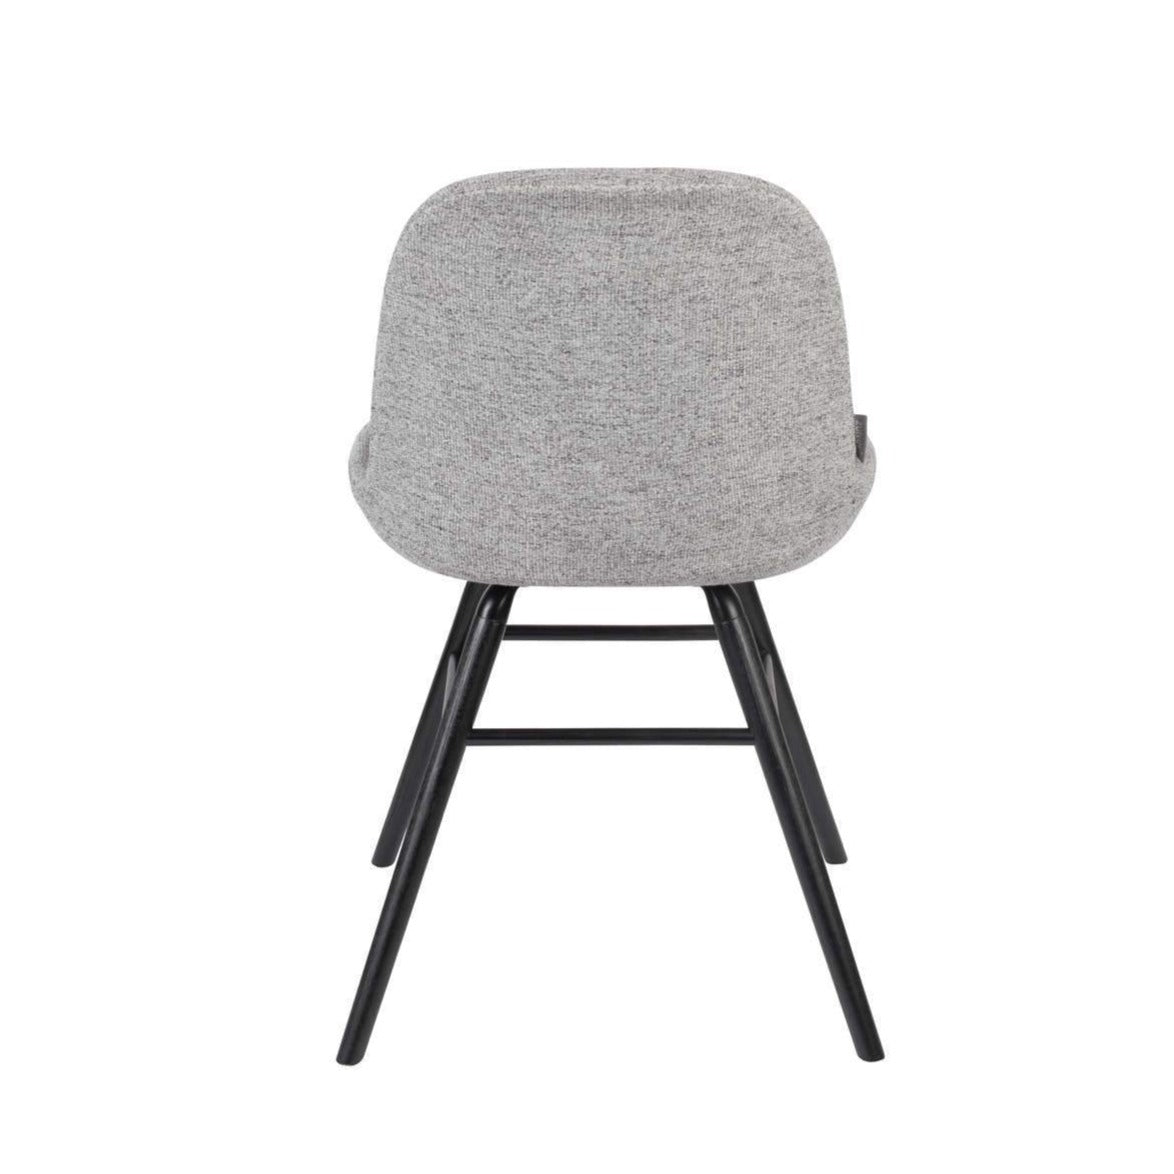 ALBERT KUIP SOFT chair grey, Zuiver, Eye on Design